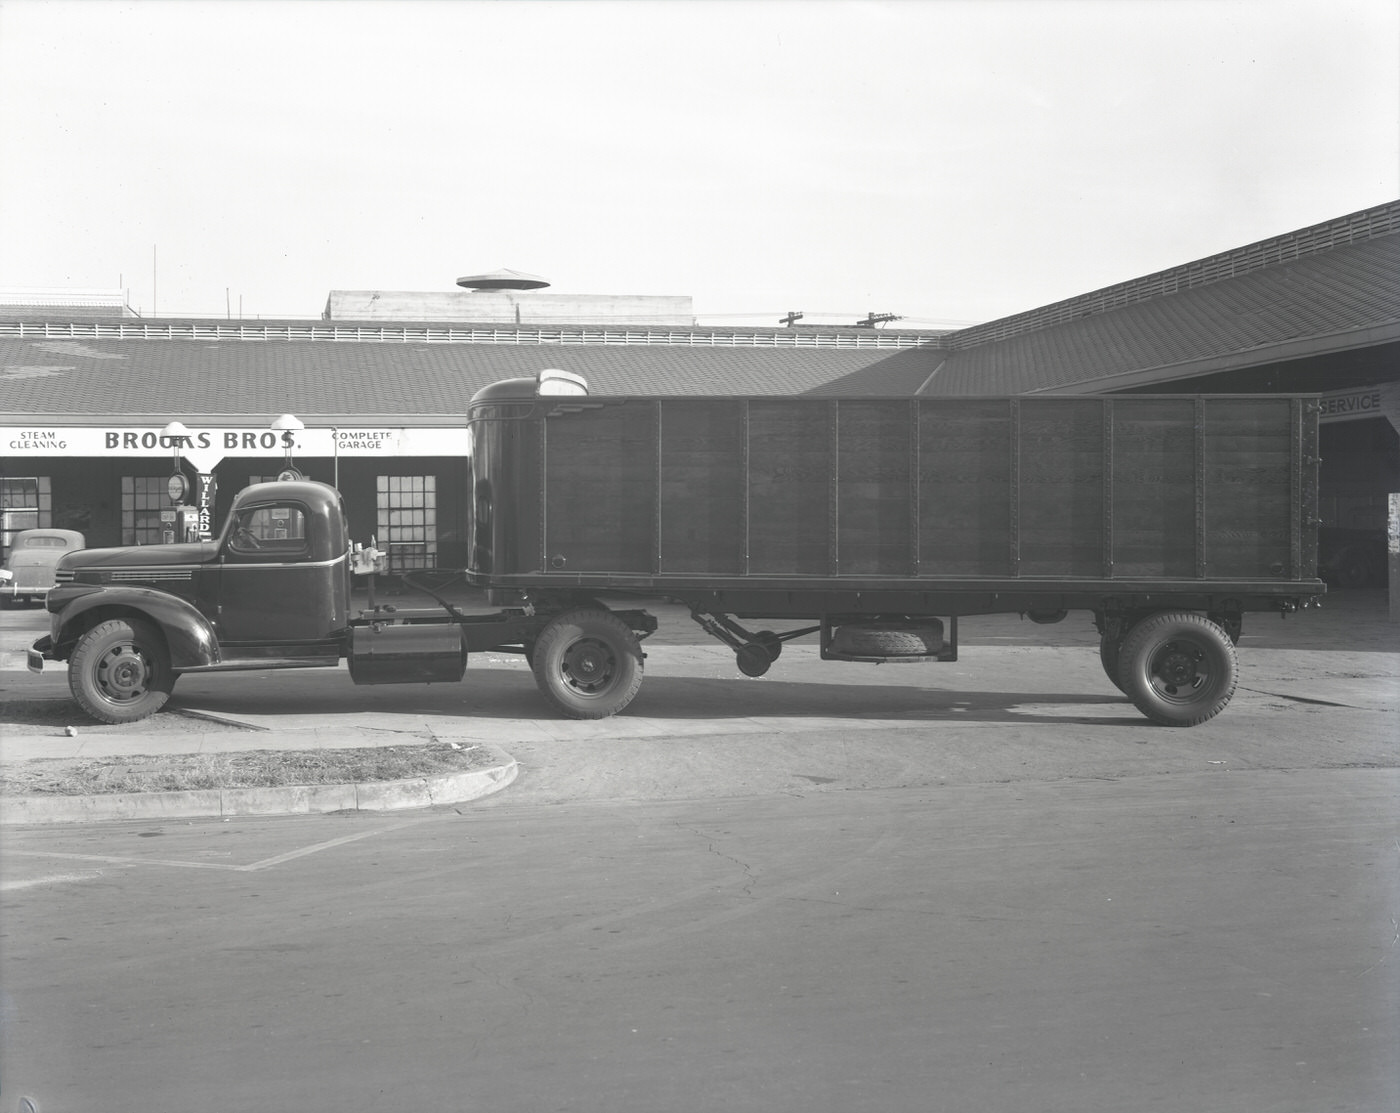 Anchor Body & Steel Truck in Parking Lot, 1943